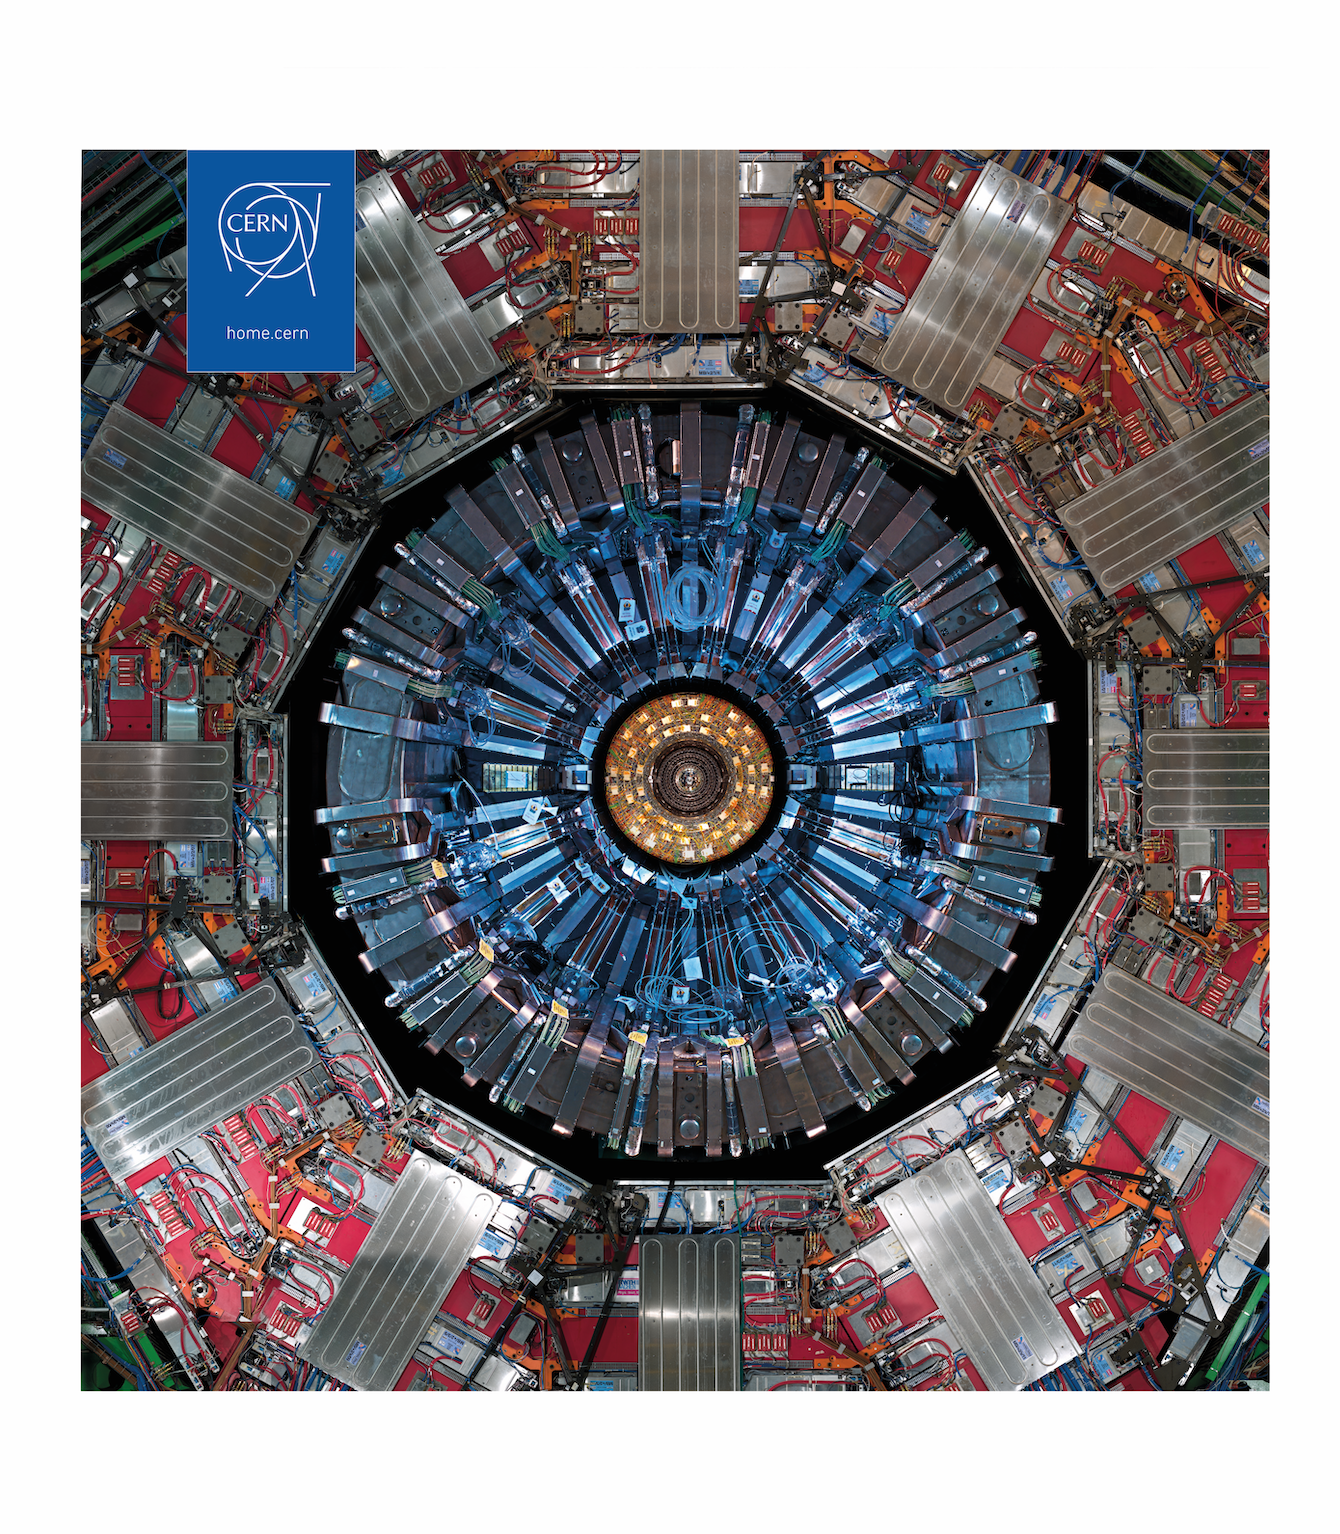 Самая большая частица. Швейцария ЦЕРН коллайдер. Большой адронный коллайдер ЦЕРН. Адронный коллайдер в Швейцарии. Большой адронный коллайдер в Швейцарии.